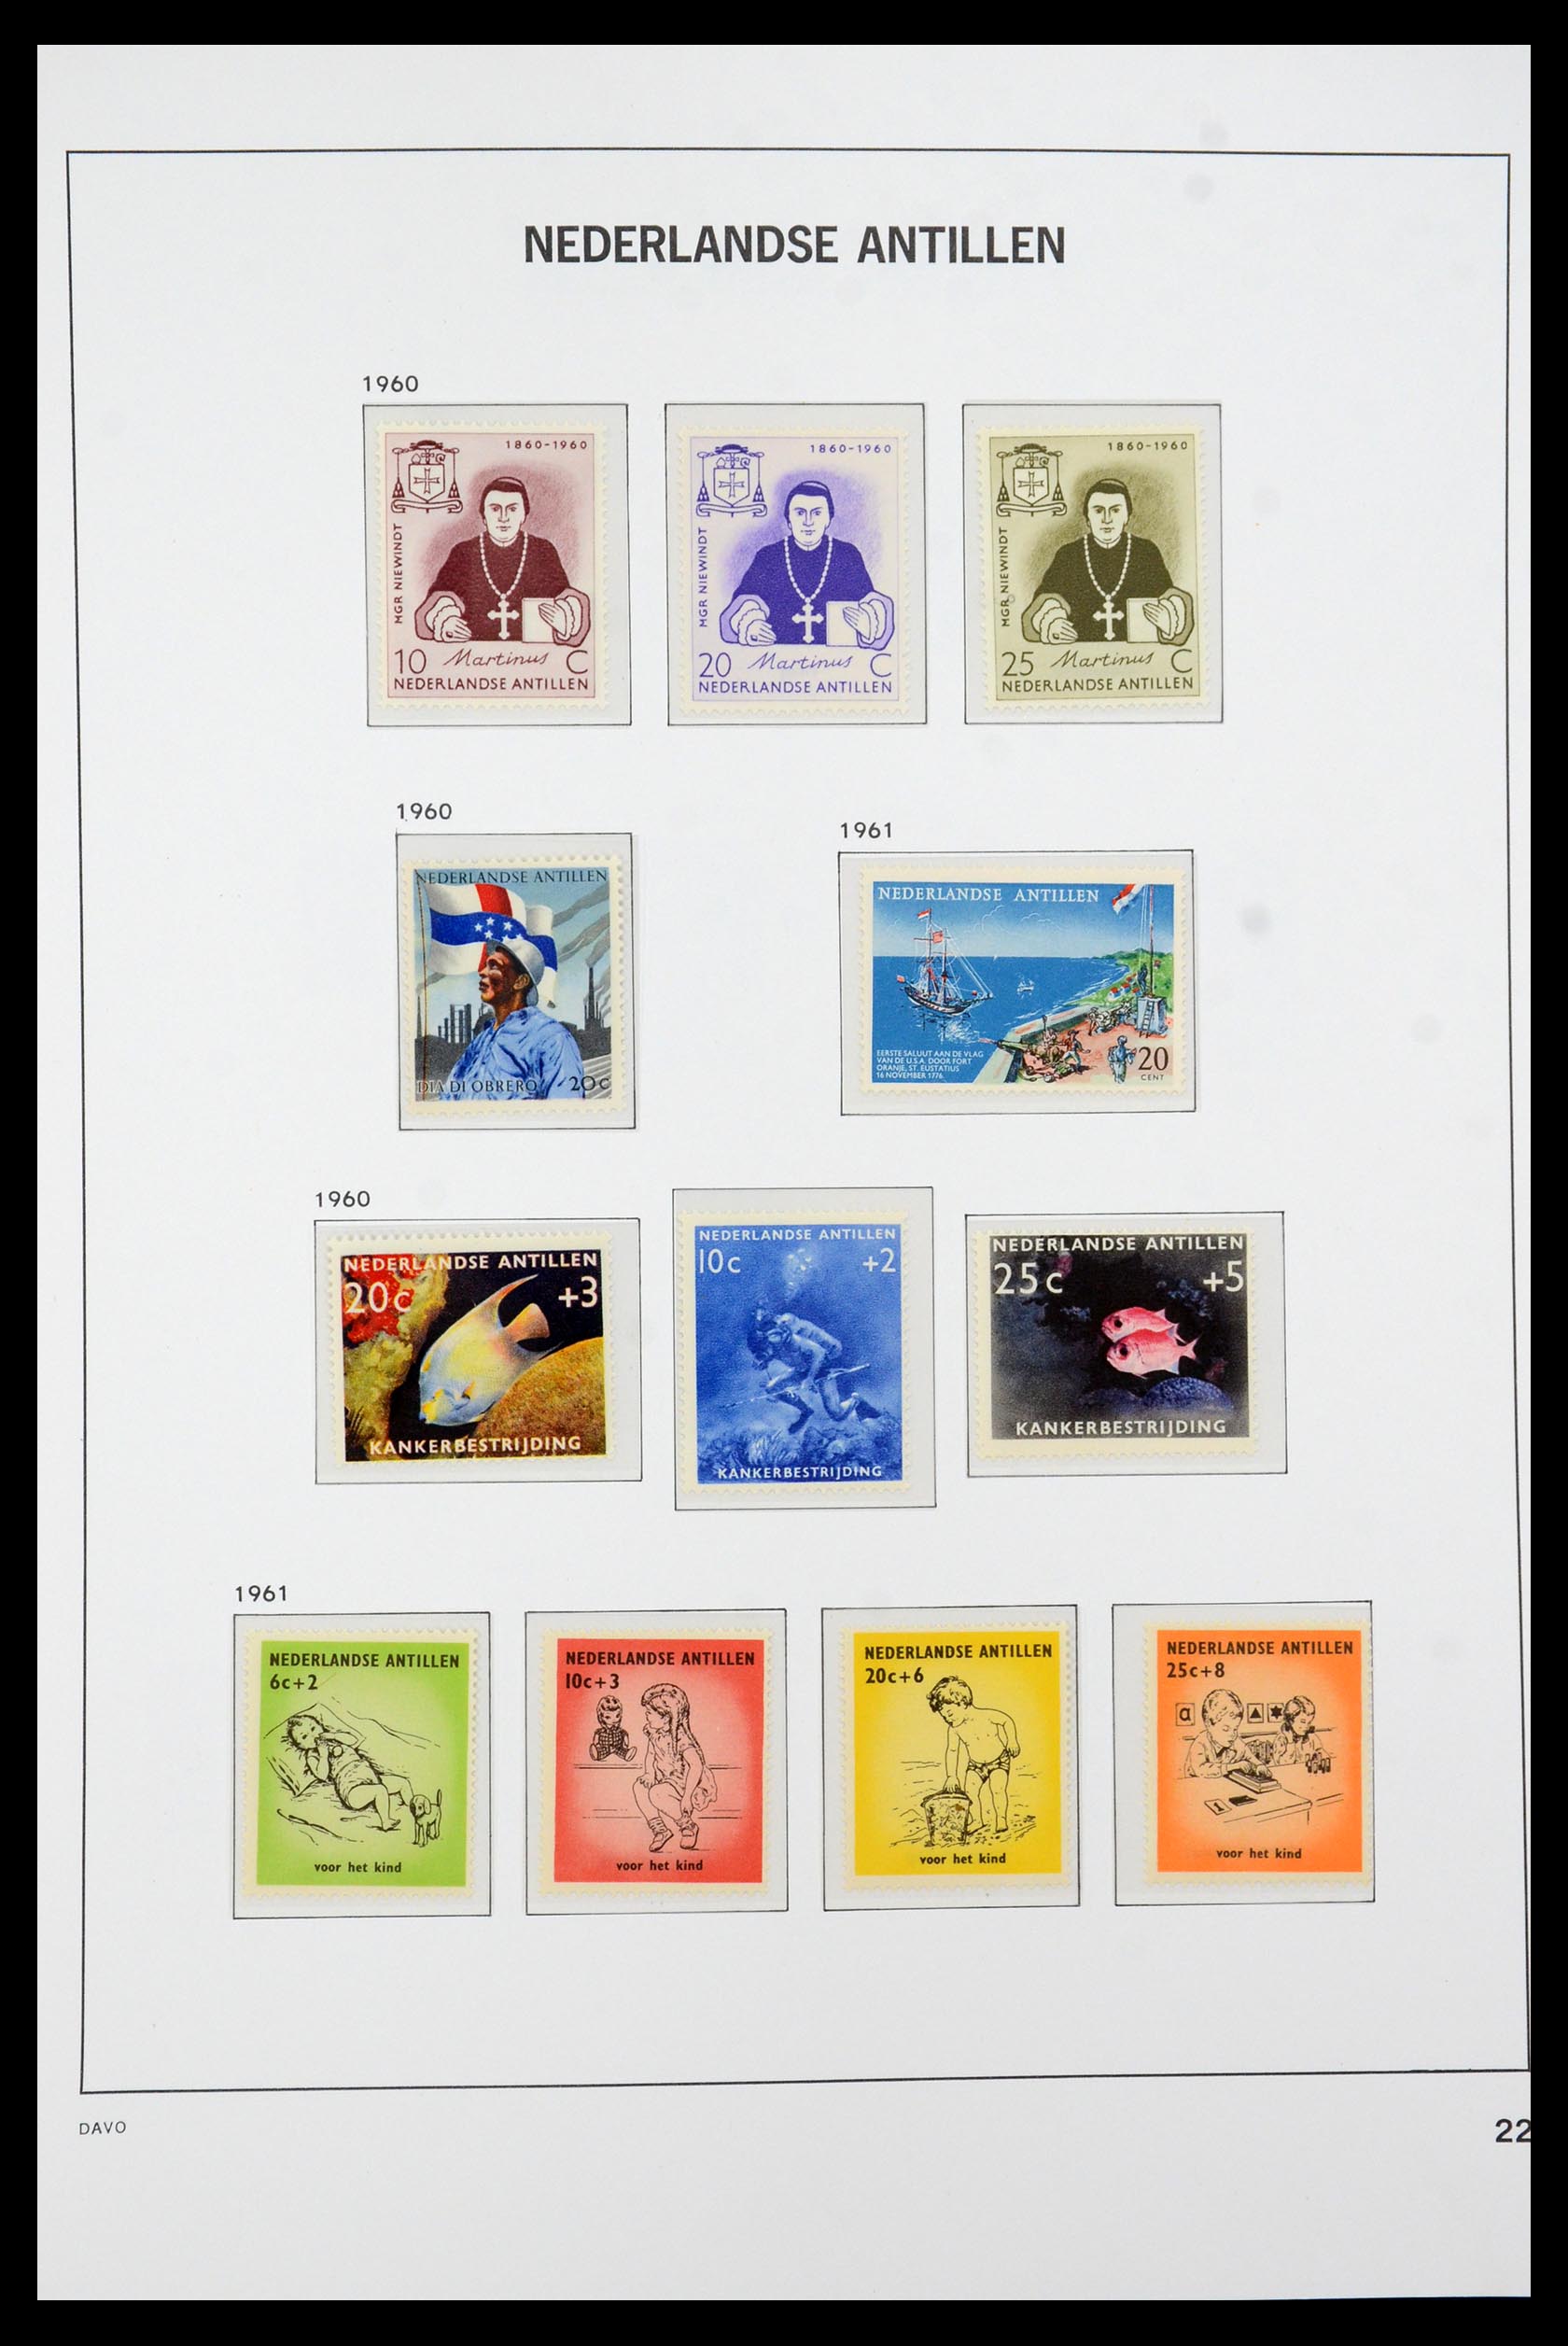 36393 009 - Stamp collection 36393 Netherlands Antilles 1949-2010.